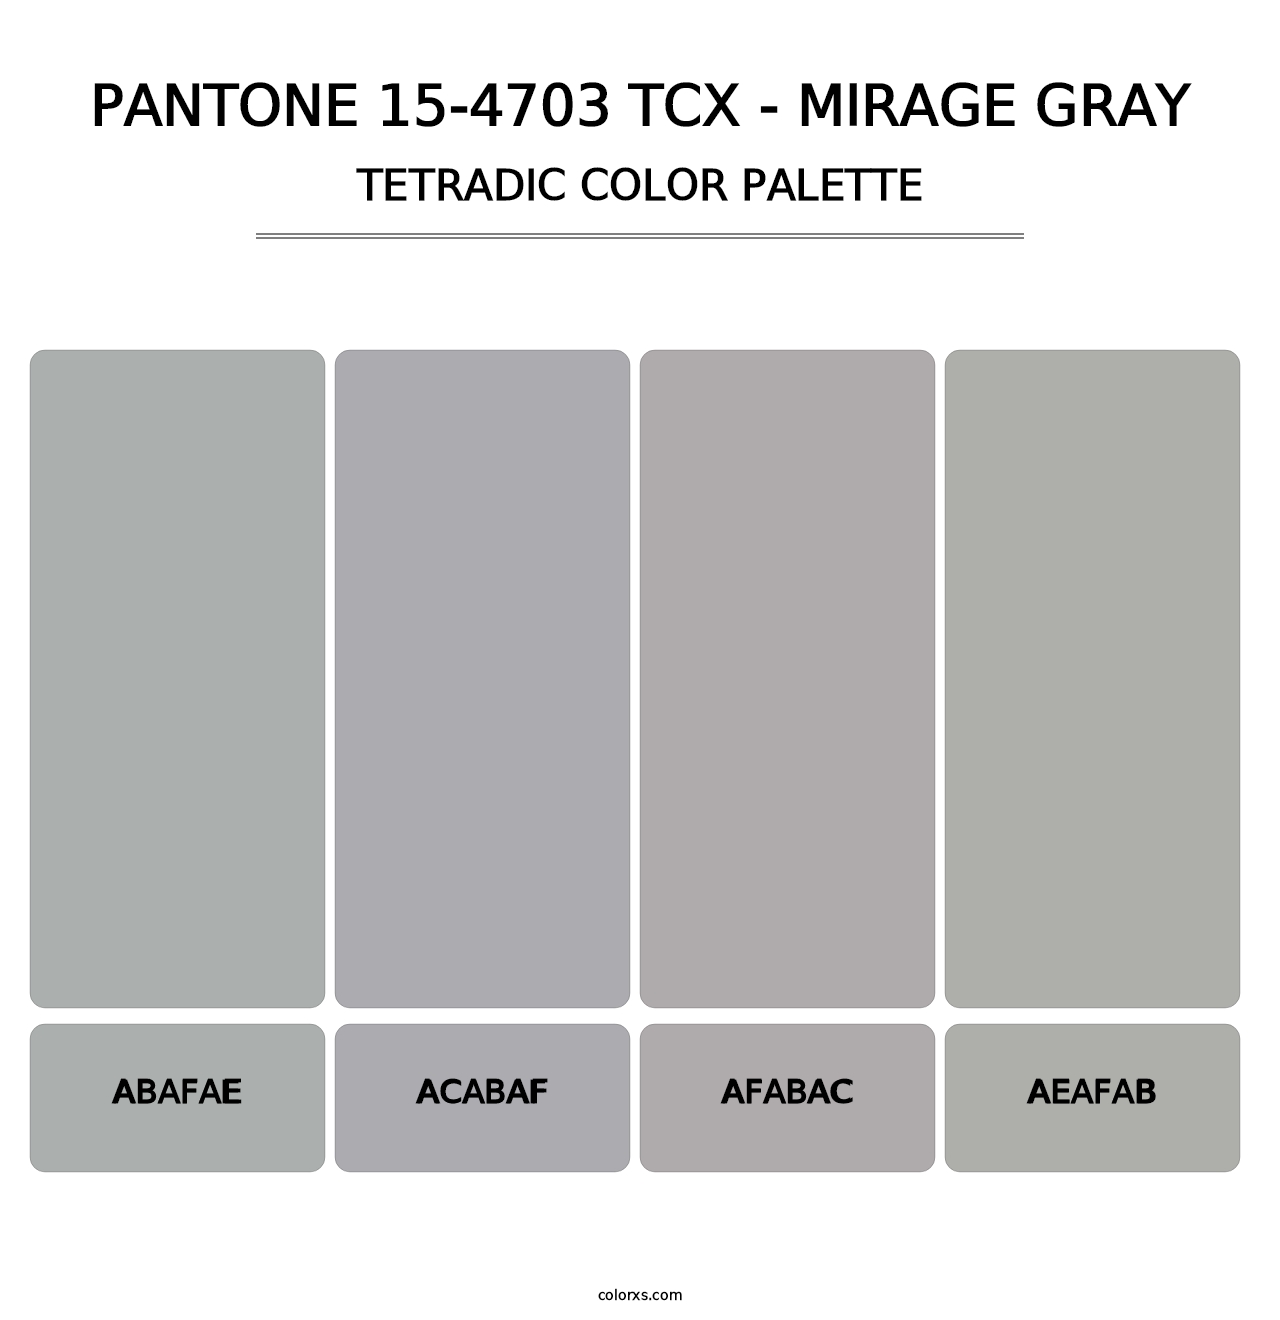 PANTONE 15-4703 TCX - Mirage Gray - Tetradic Color Palette